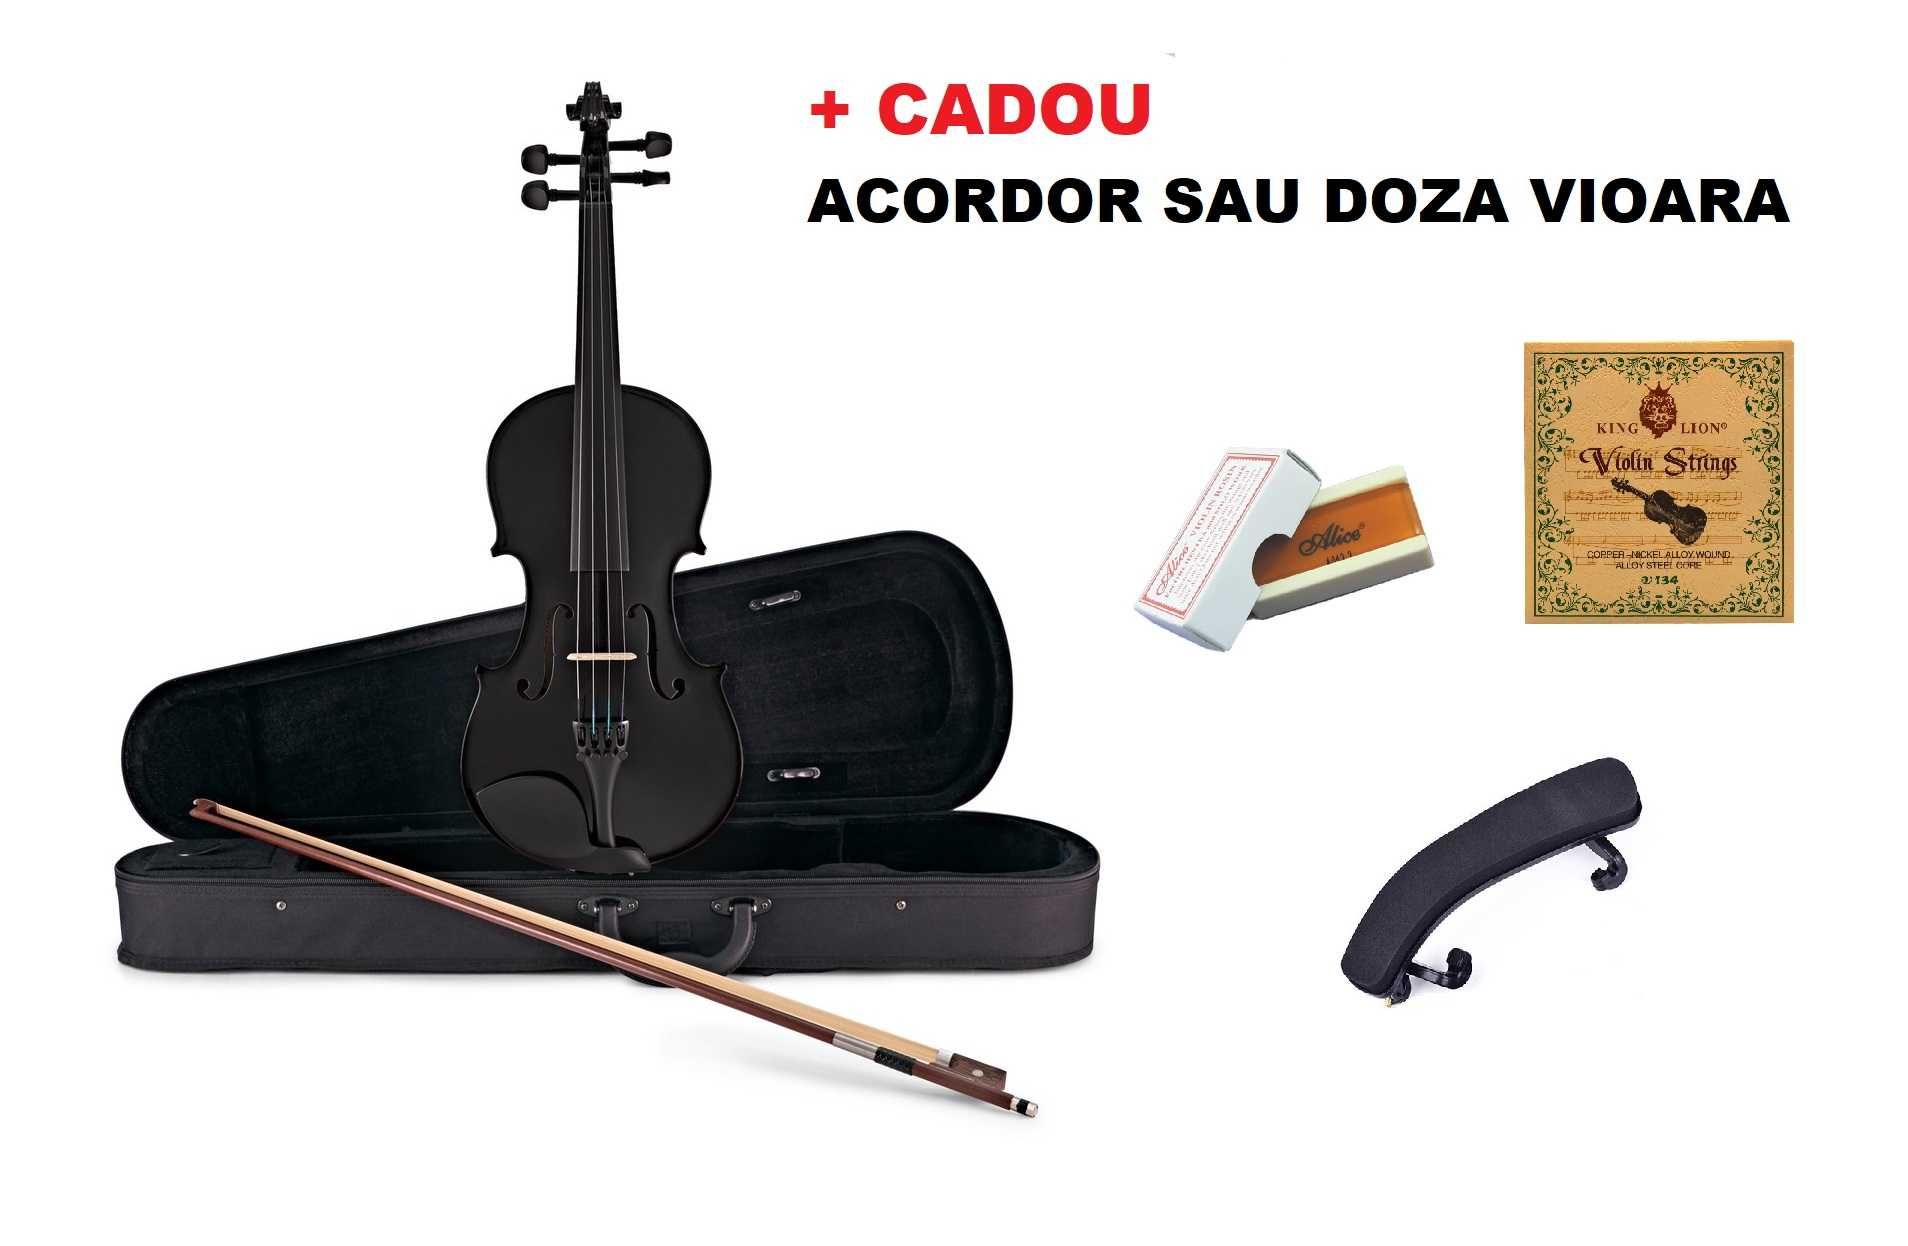 Set COMPLET vioara 4/4 neagra cu toc,arcus,sacaz,corzi,barbie + CADOU